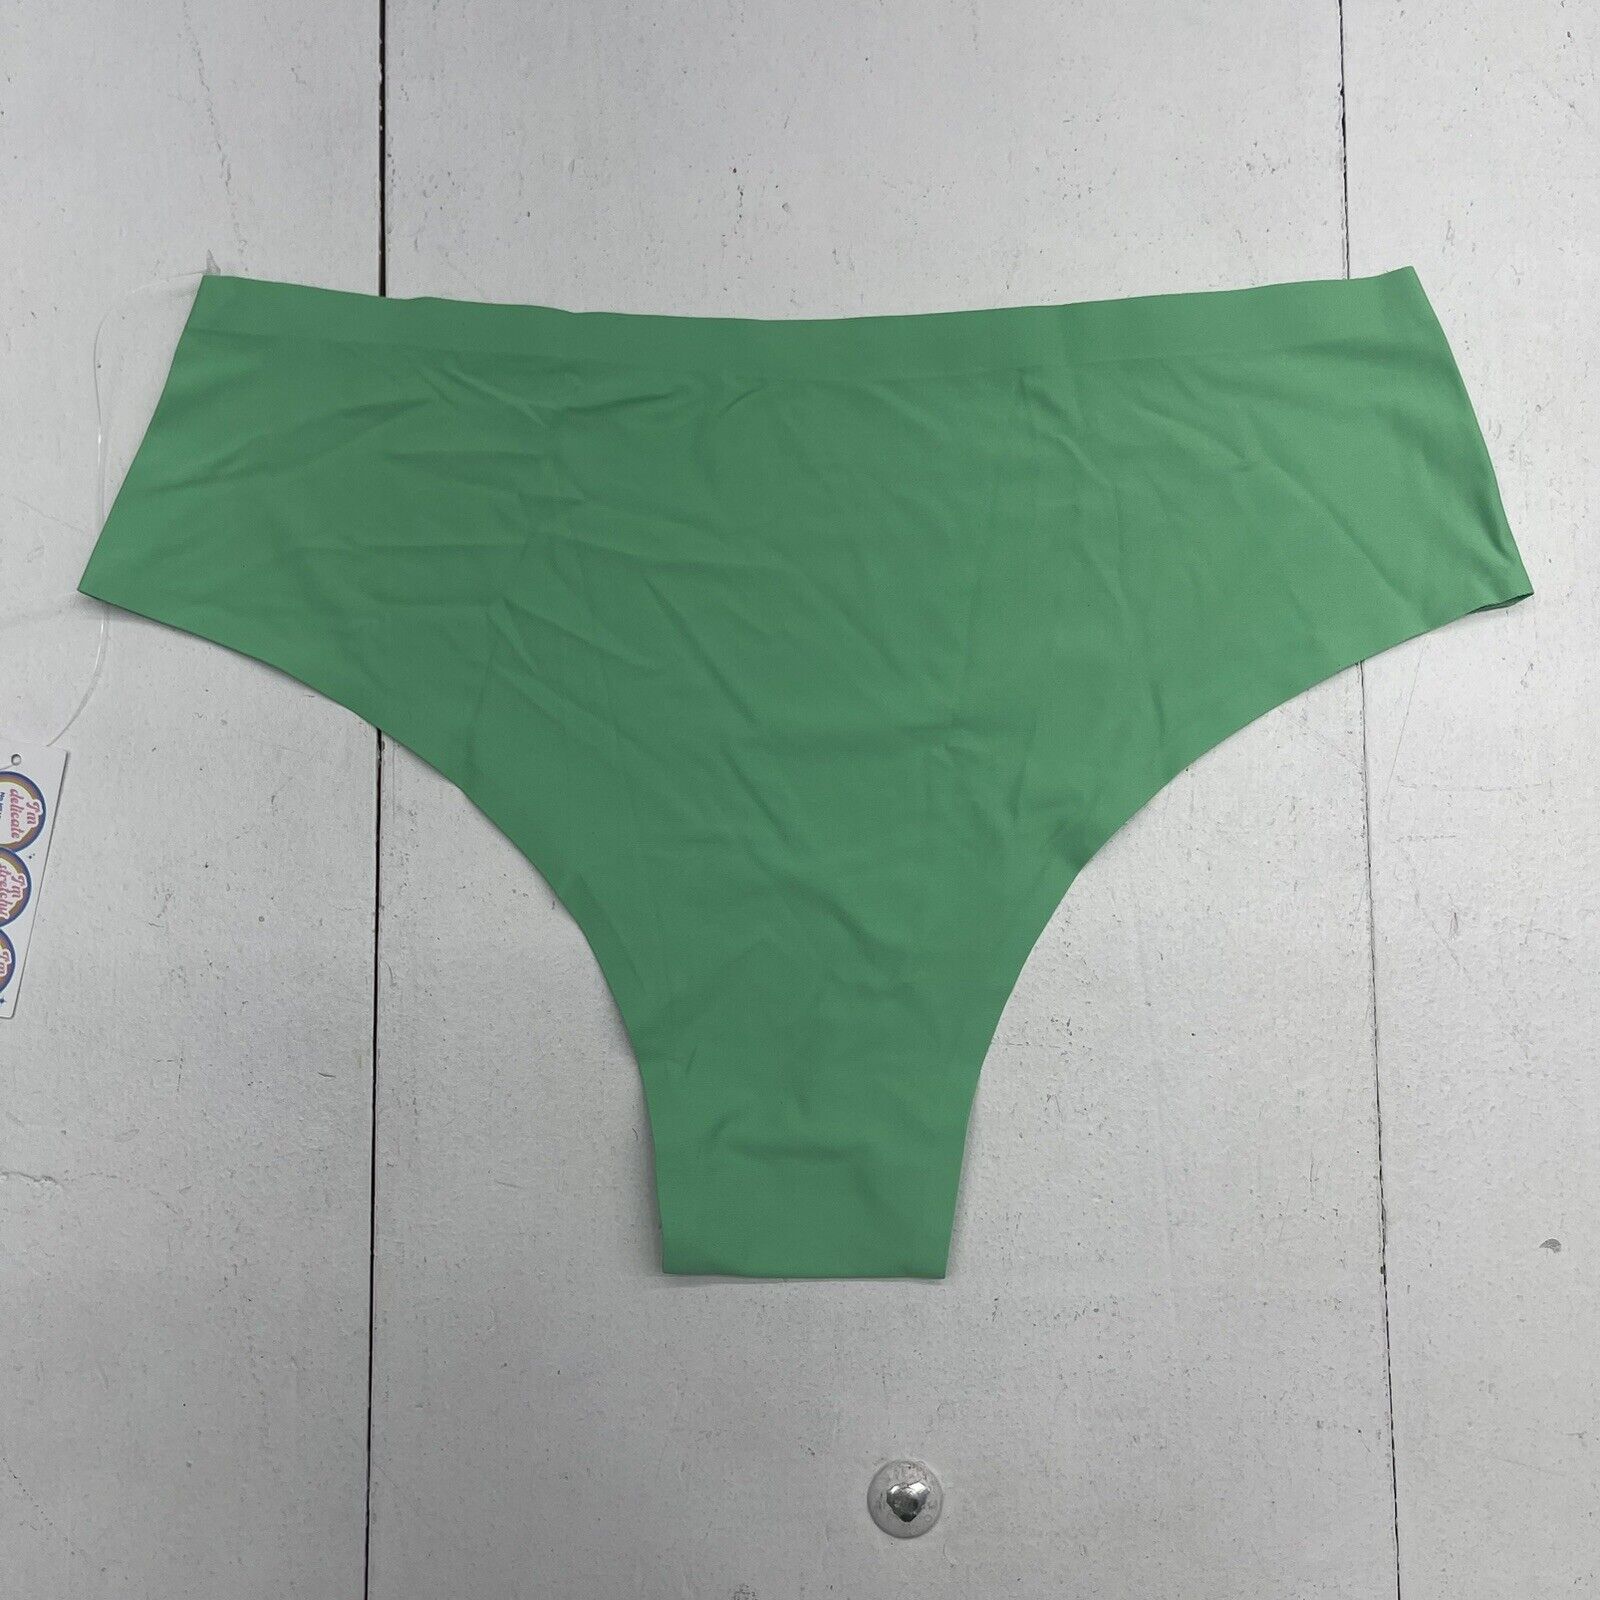 PSD Spliced Skins Lime Sports Bra Women's Top Underwear (Refurbished) –